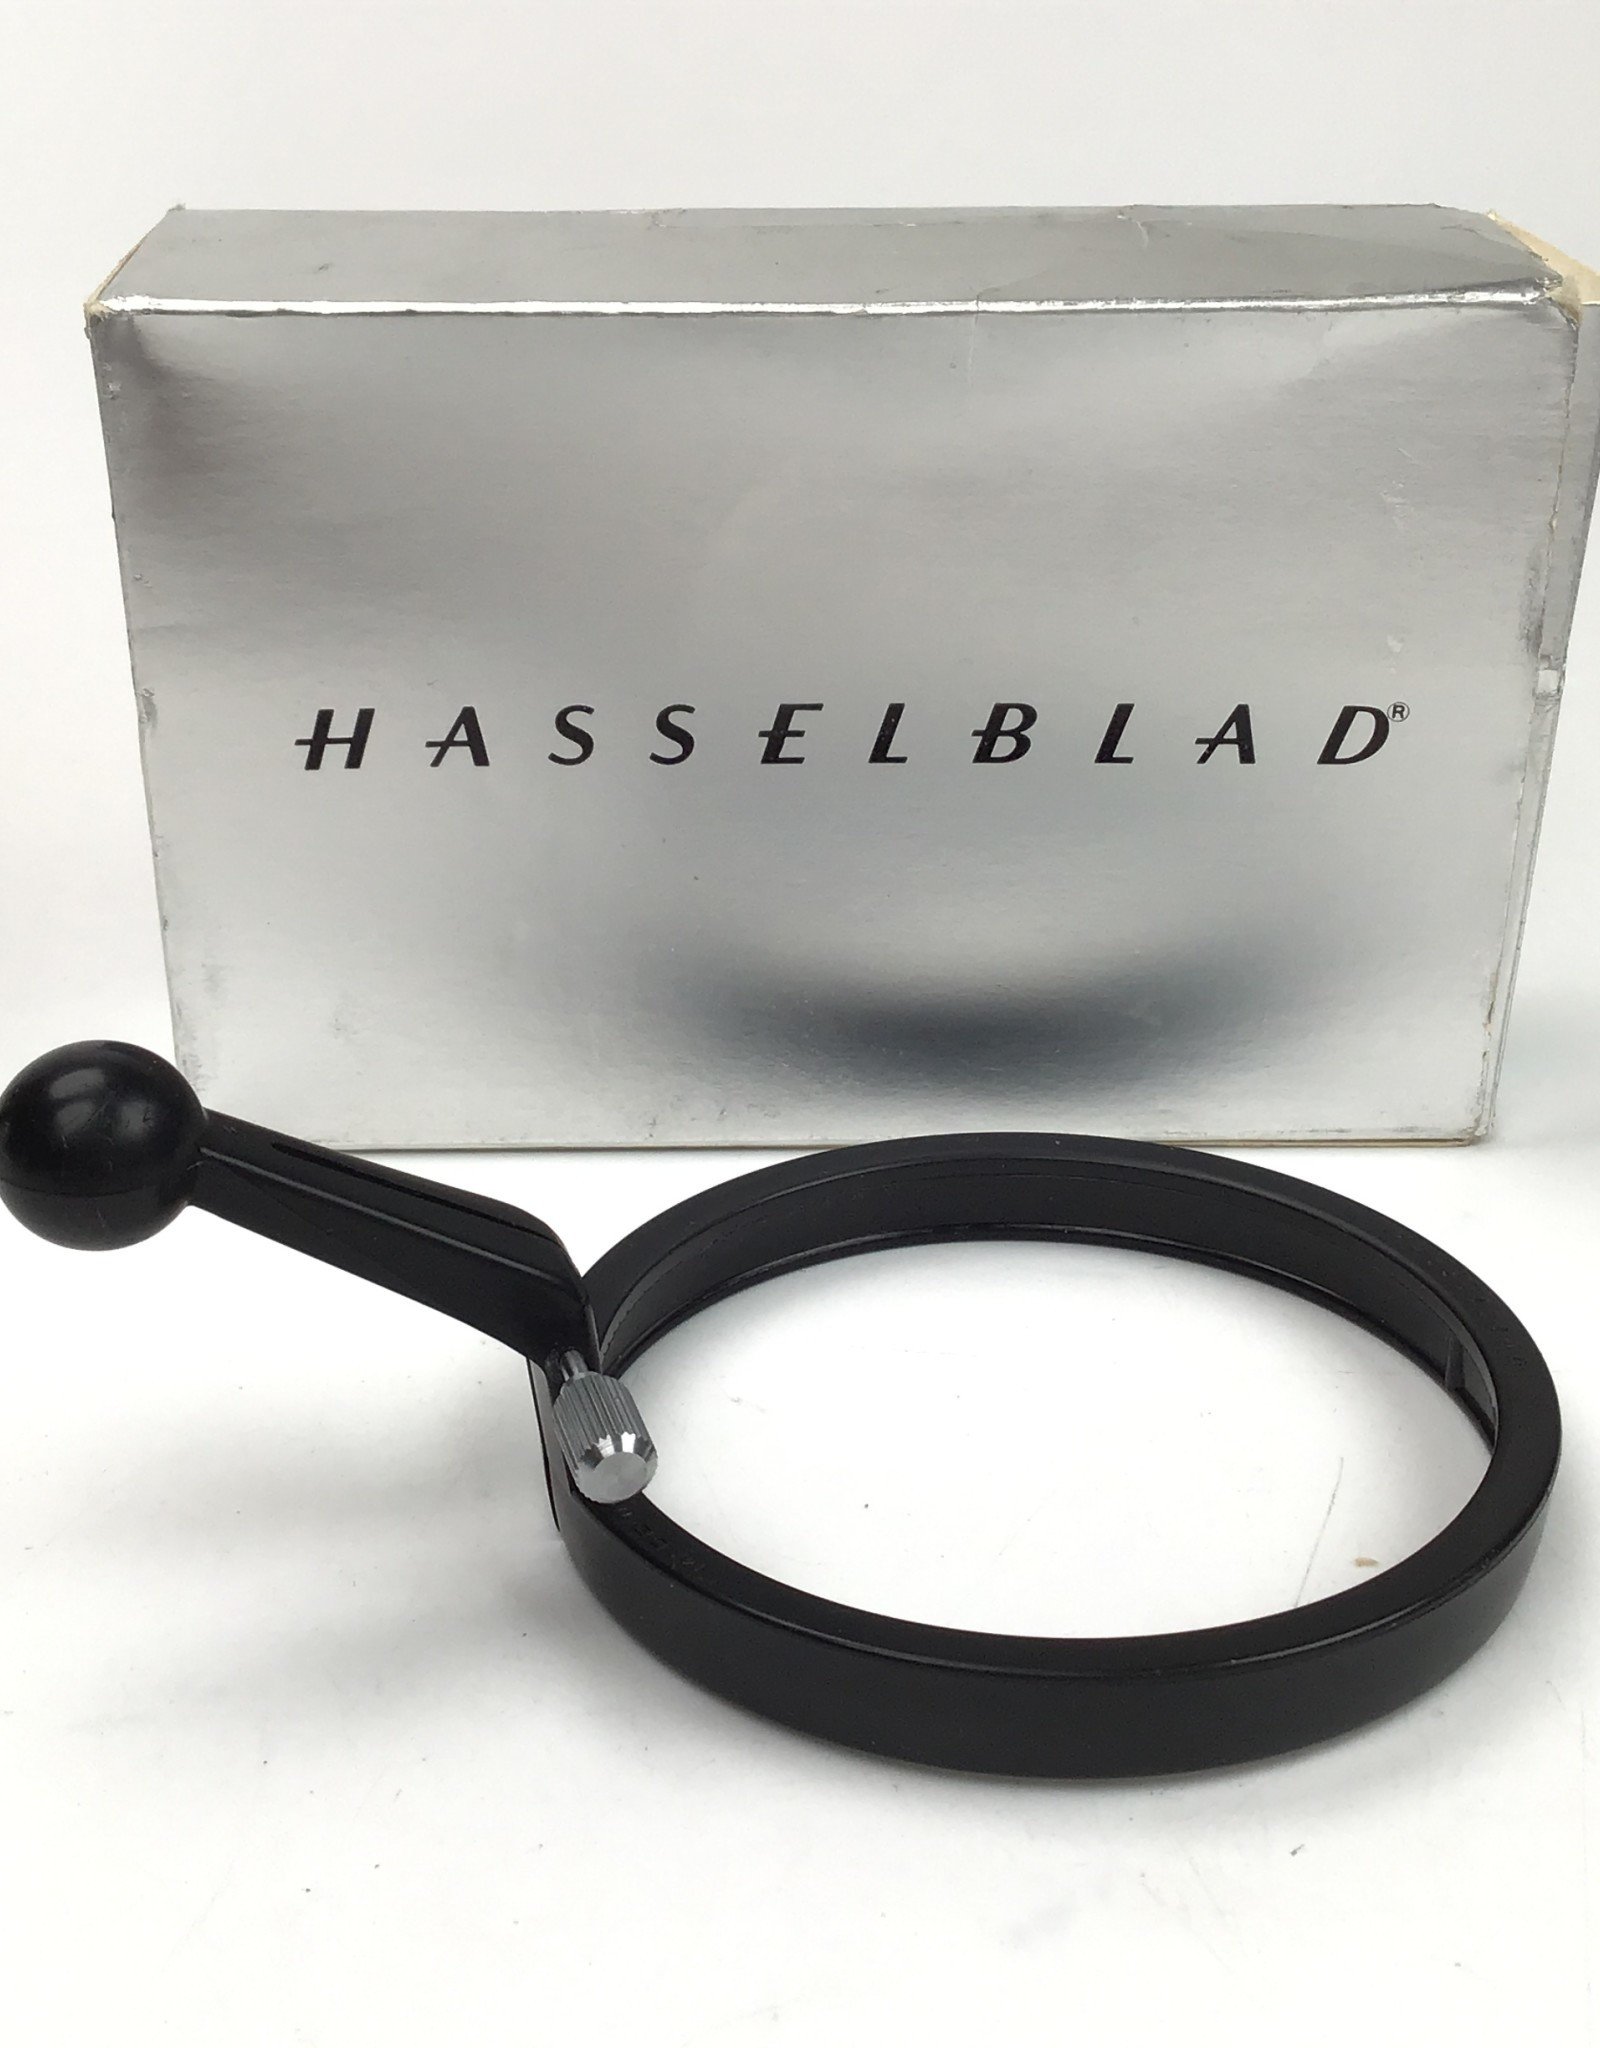 Hasselblad Hasselblad Focusing Handle 1 40061 in Box Used Good